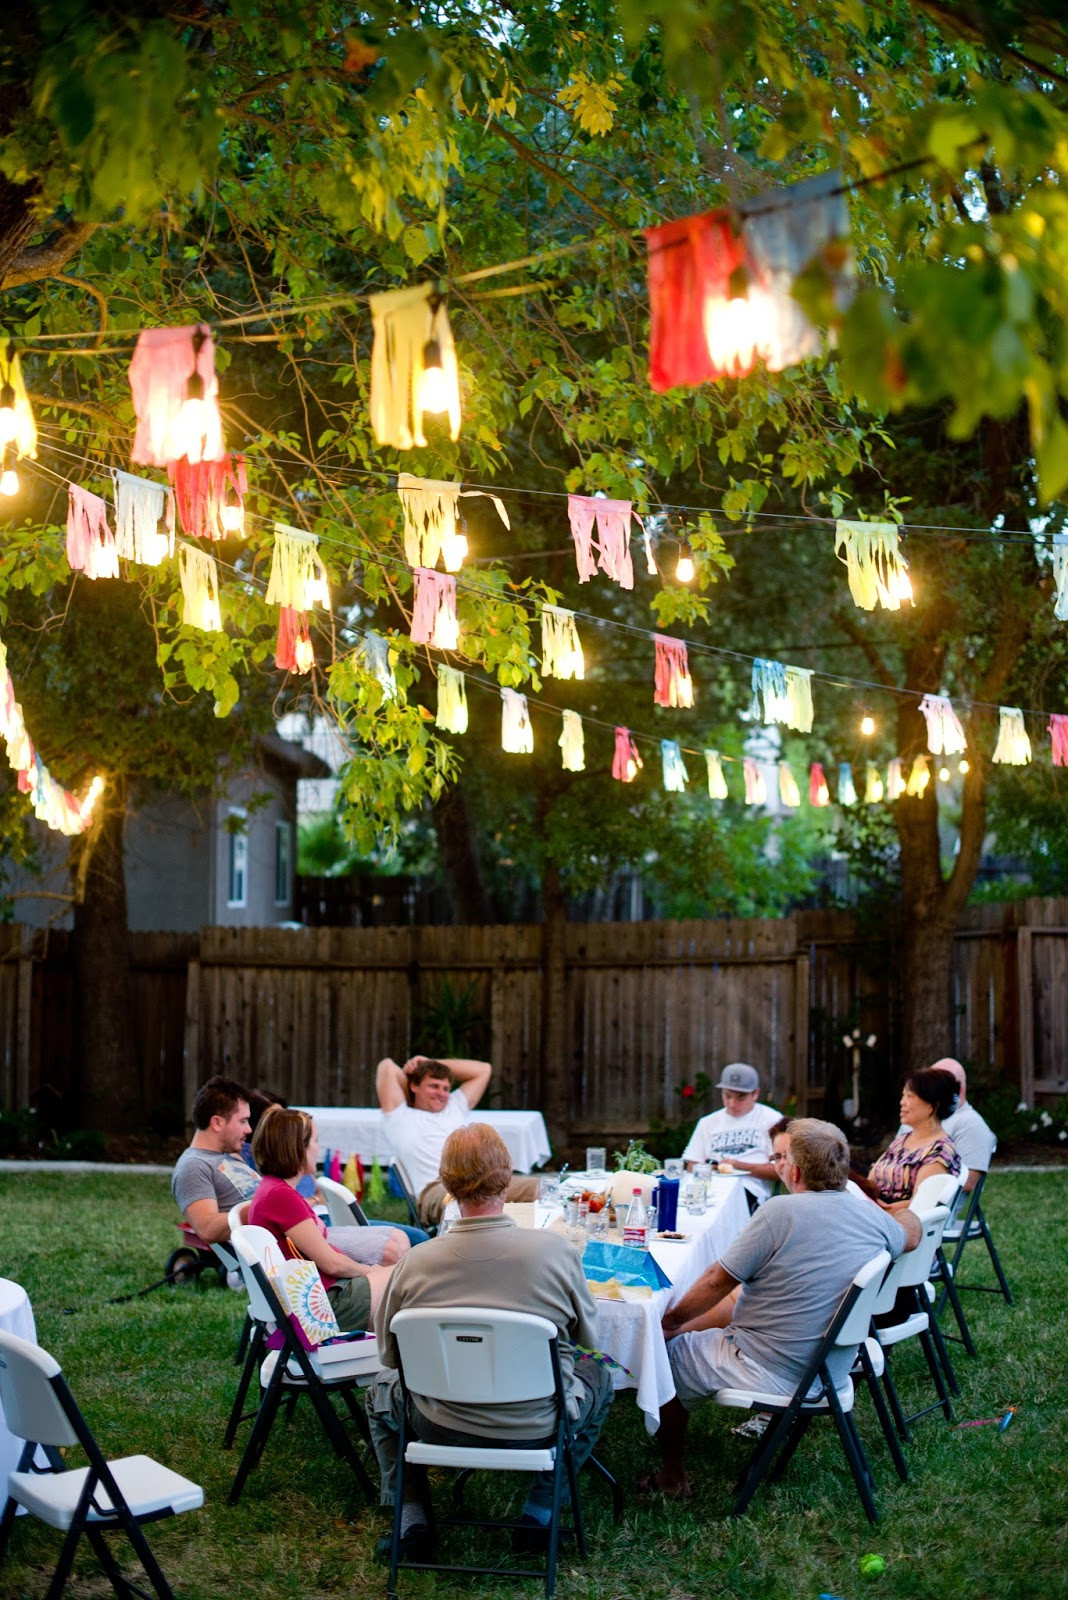 Backyard Party Design Ideas
 Domestic Fashionista Backyard Fall Celebration